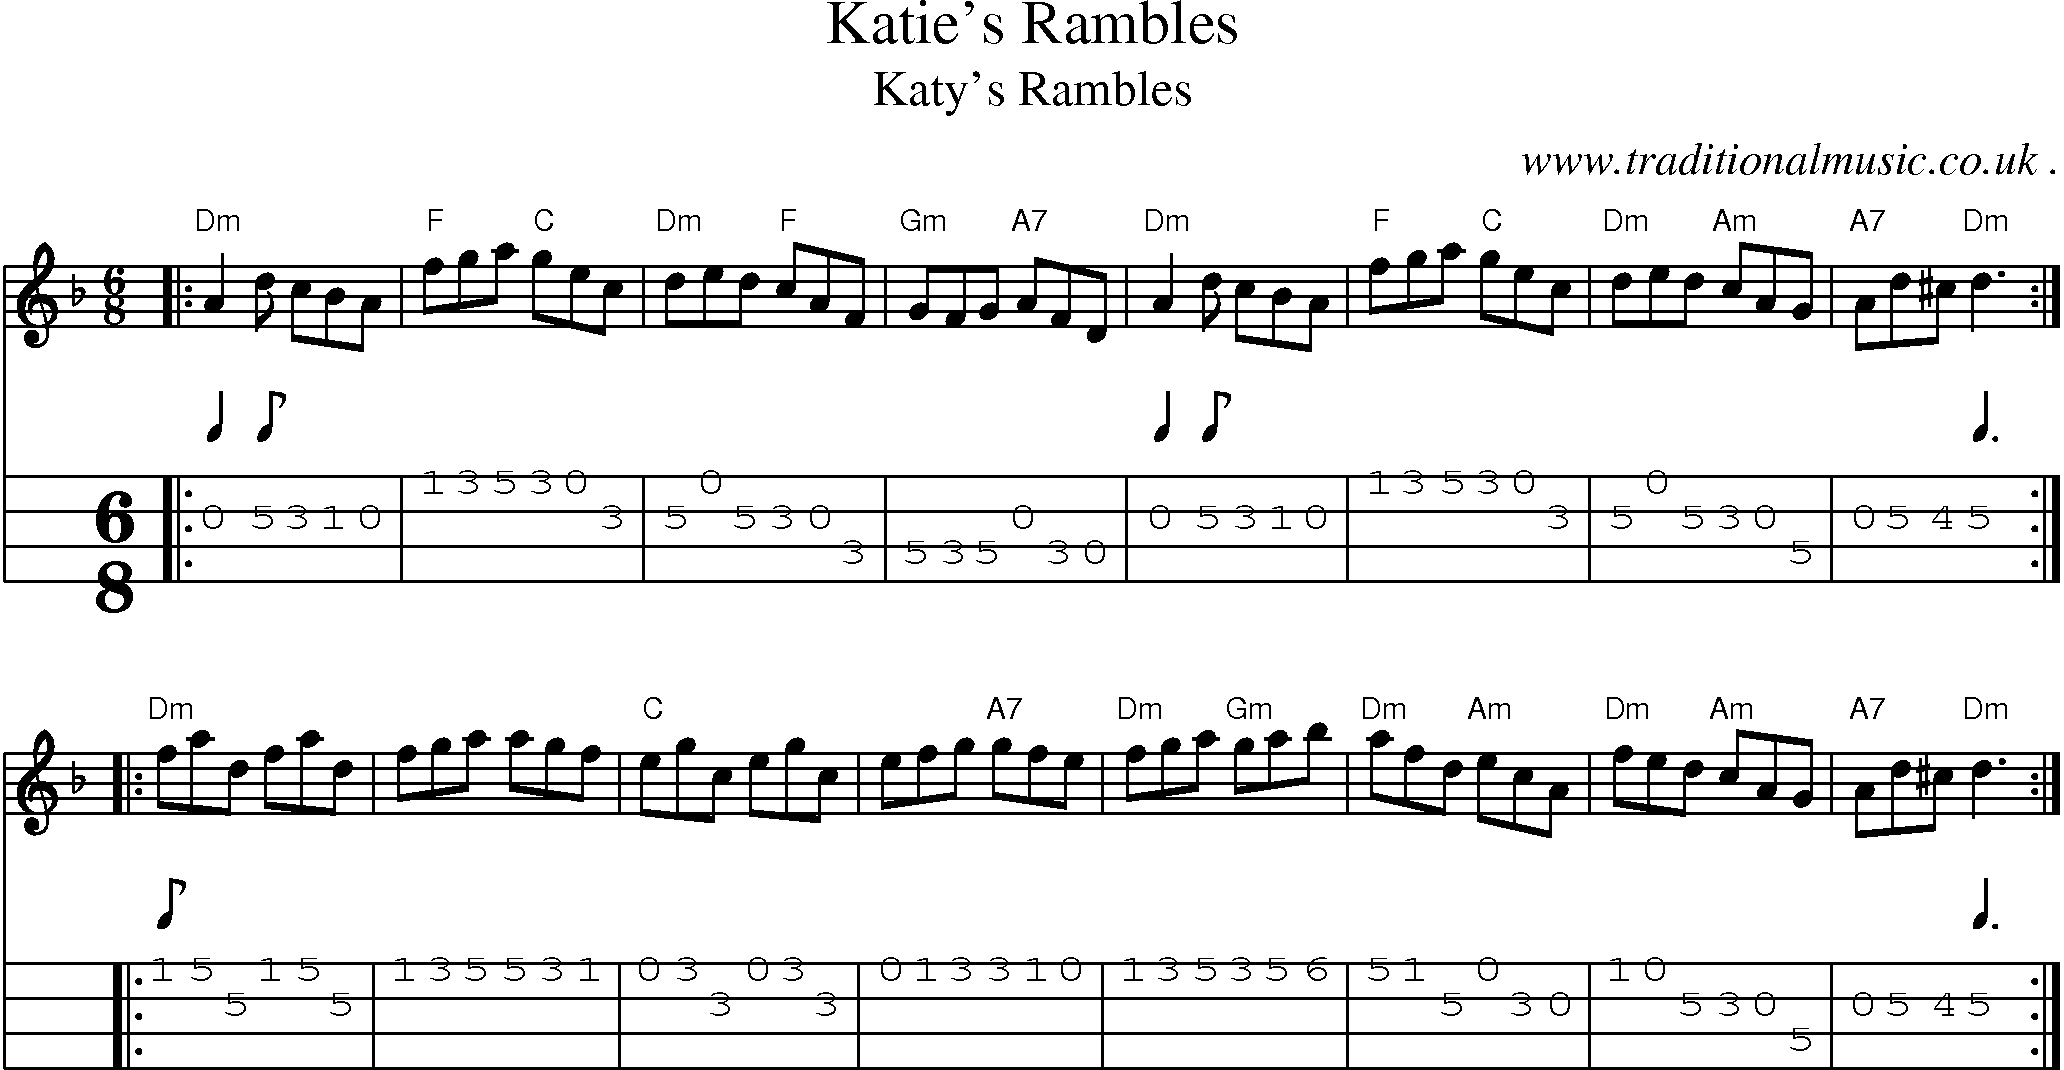 Sheet-music  score, Chords and Mandolin Tabs for Katies Rambles